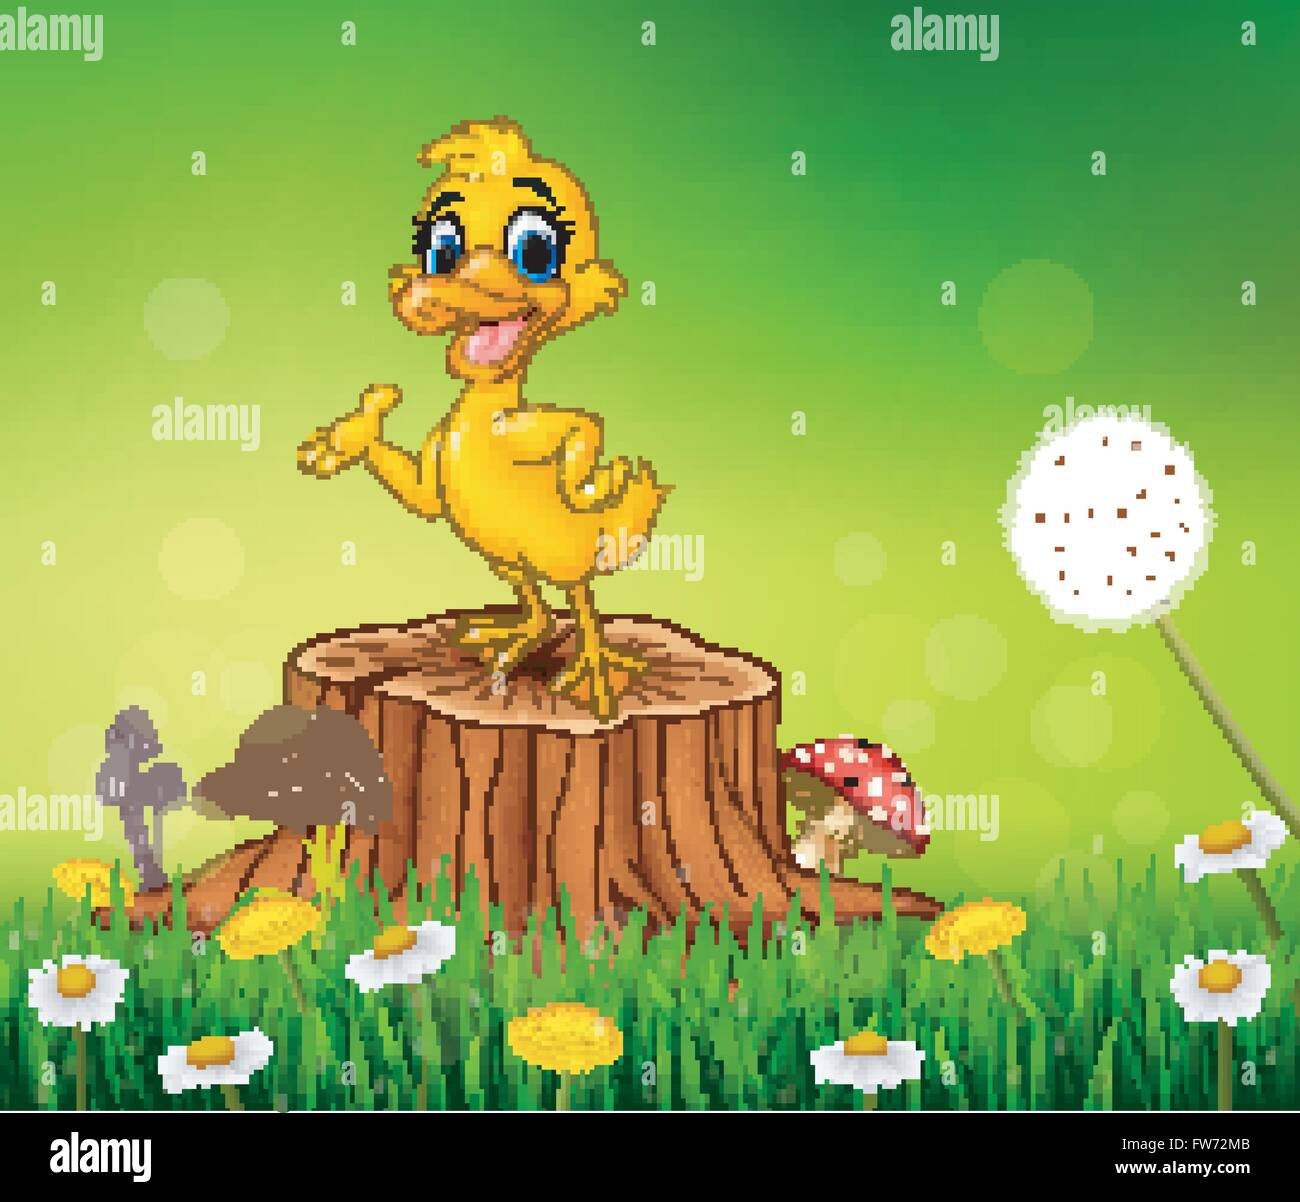 Cartoon funny duck presenting on tree stump in summer season background Stock Vector